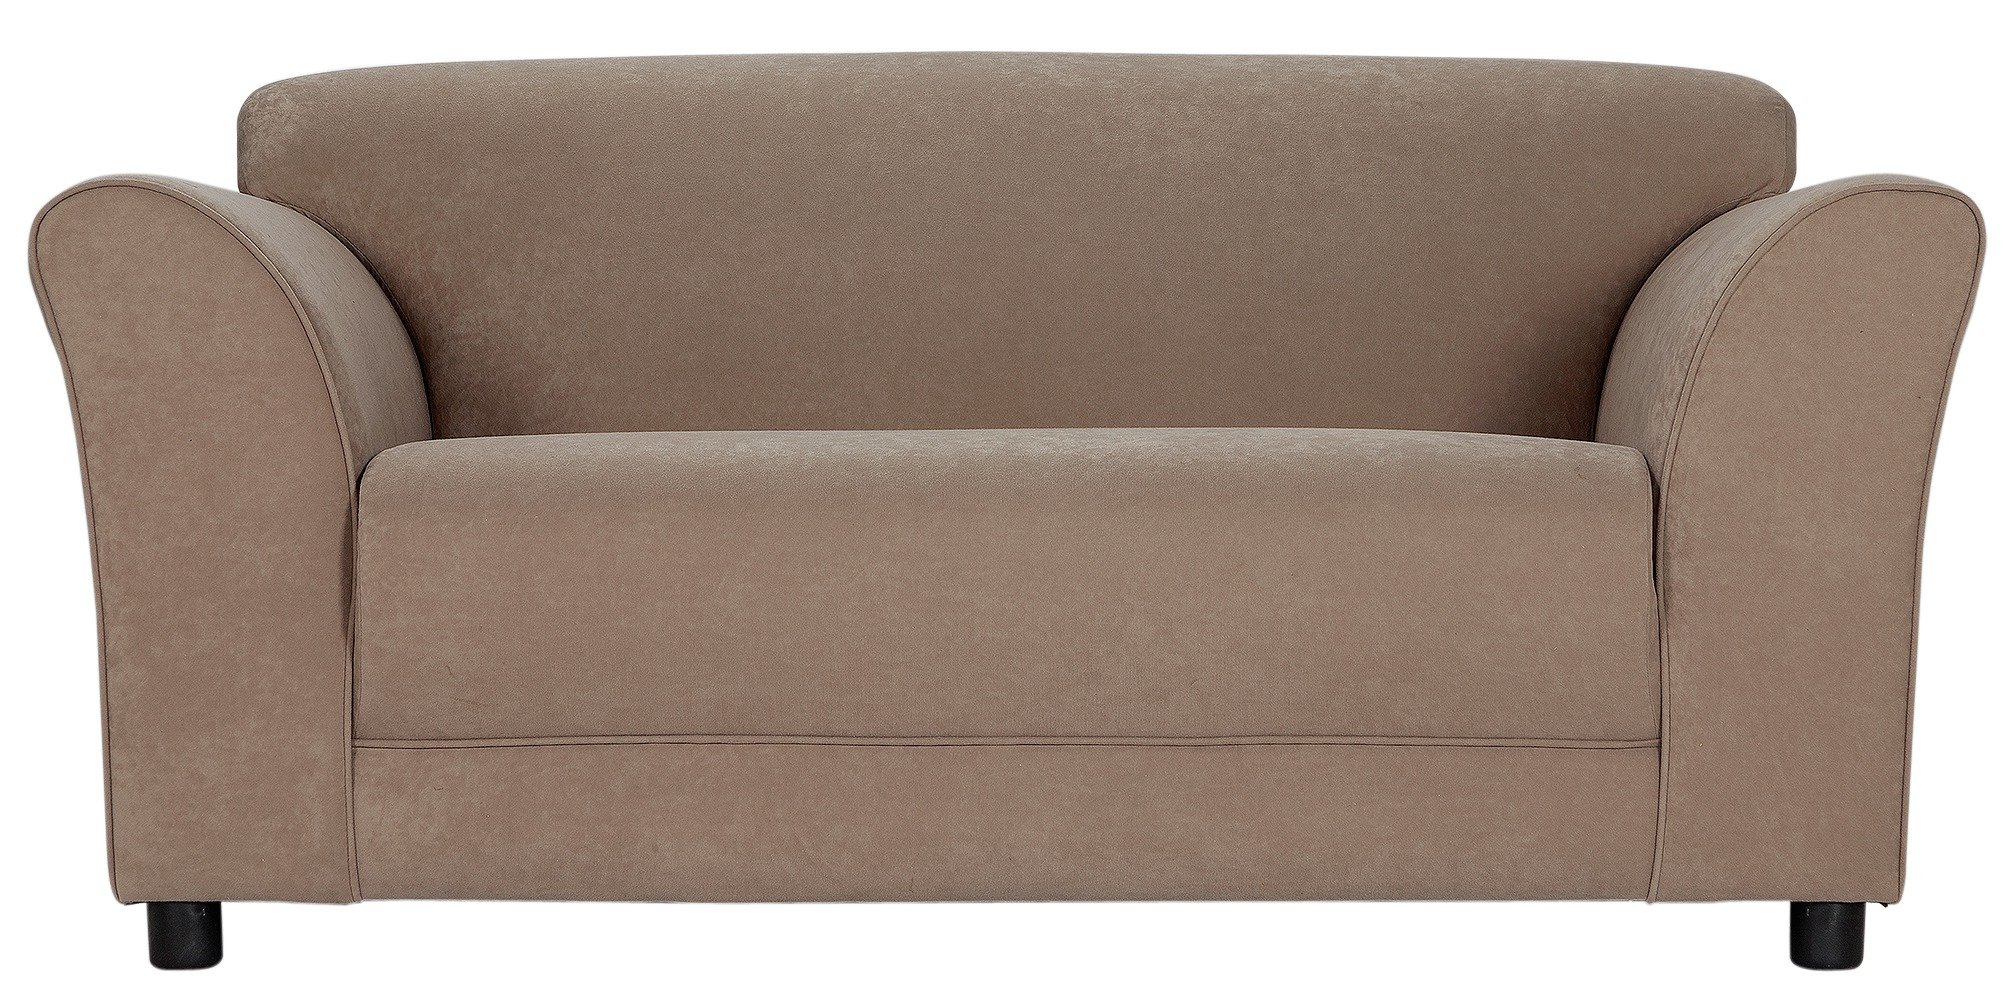 Argos Home Jenna Compact 2 Seater Fabric Sofa - Mink